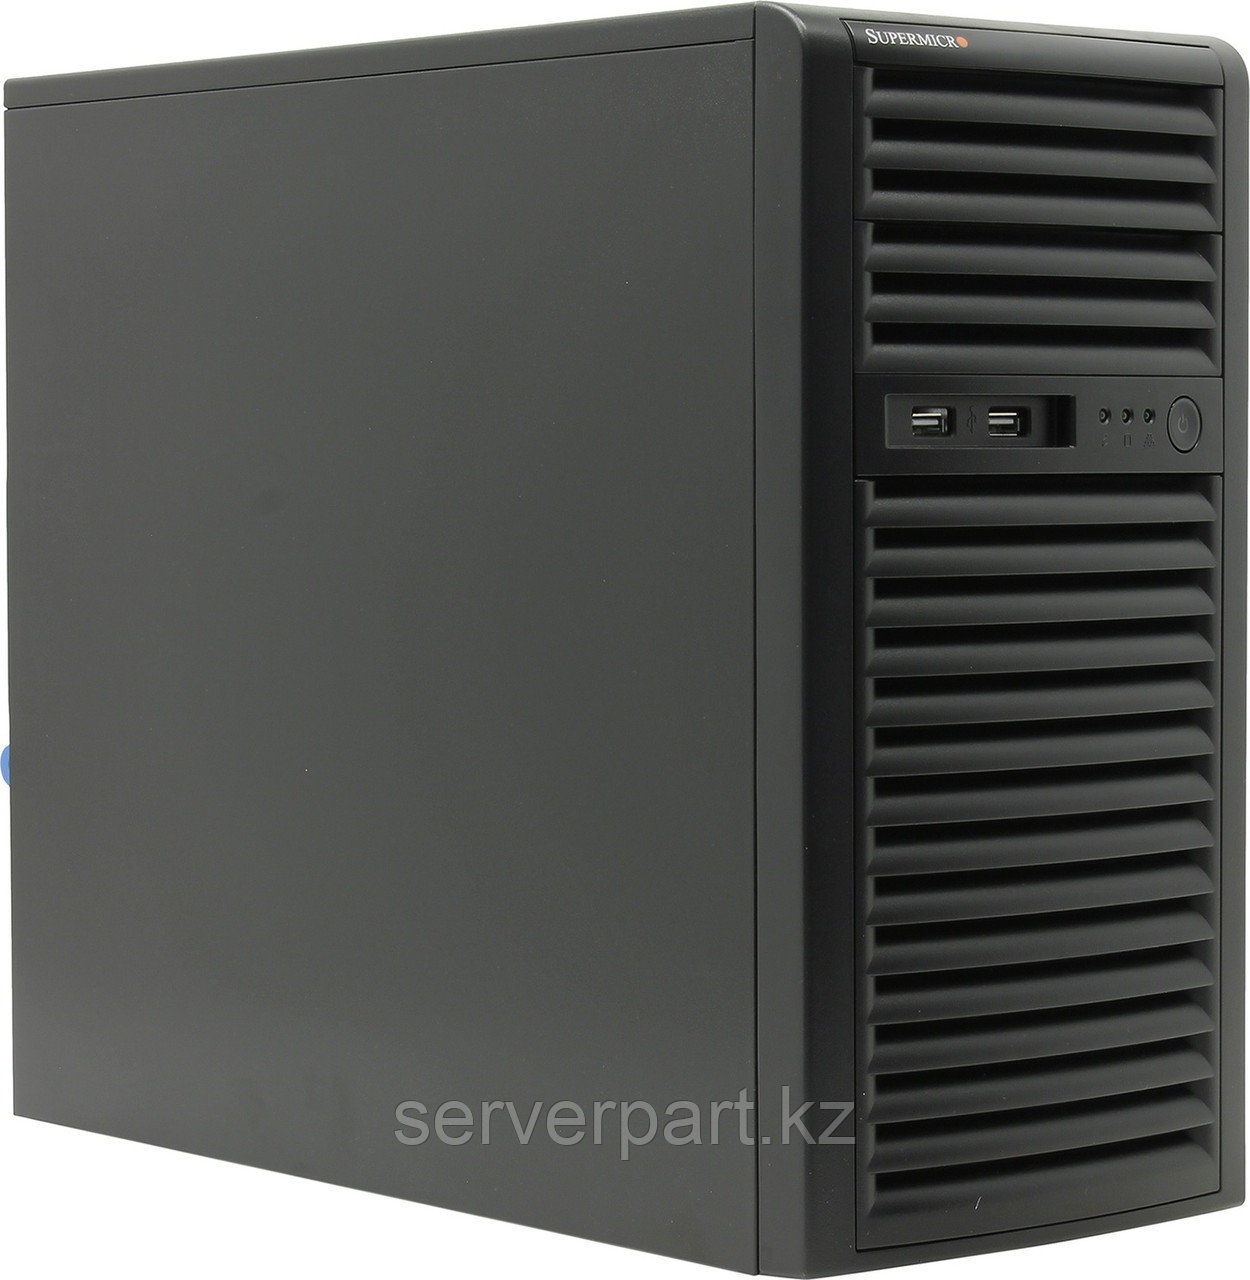 Сервер Supermicro SYS-5039D Tower/4-core intel xeon E3-1220v6 3GHz/48GB UDIMM nECC/1x240GB SSD RI Hyb